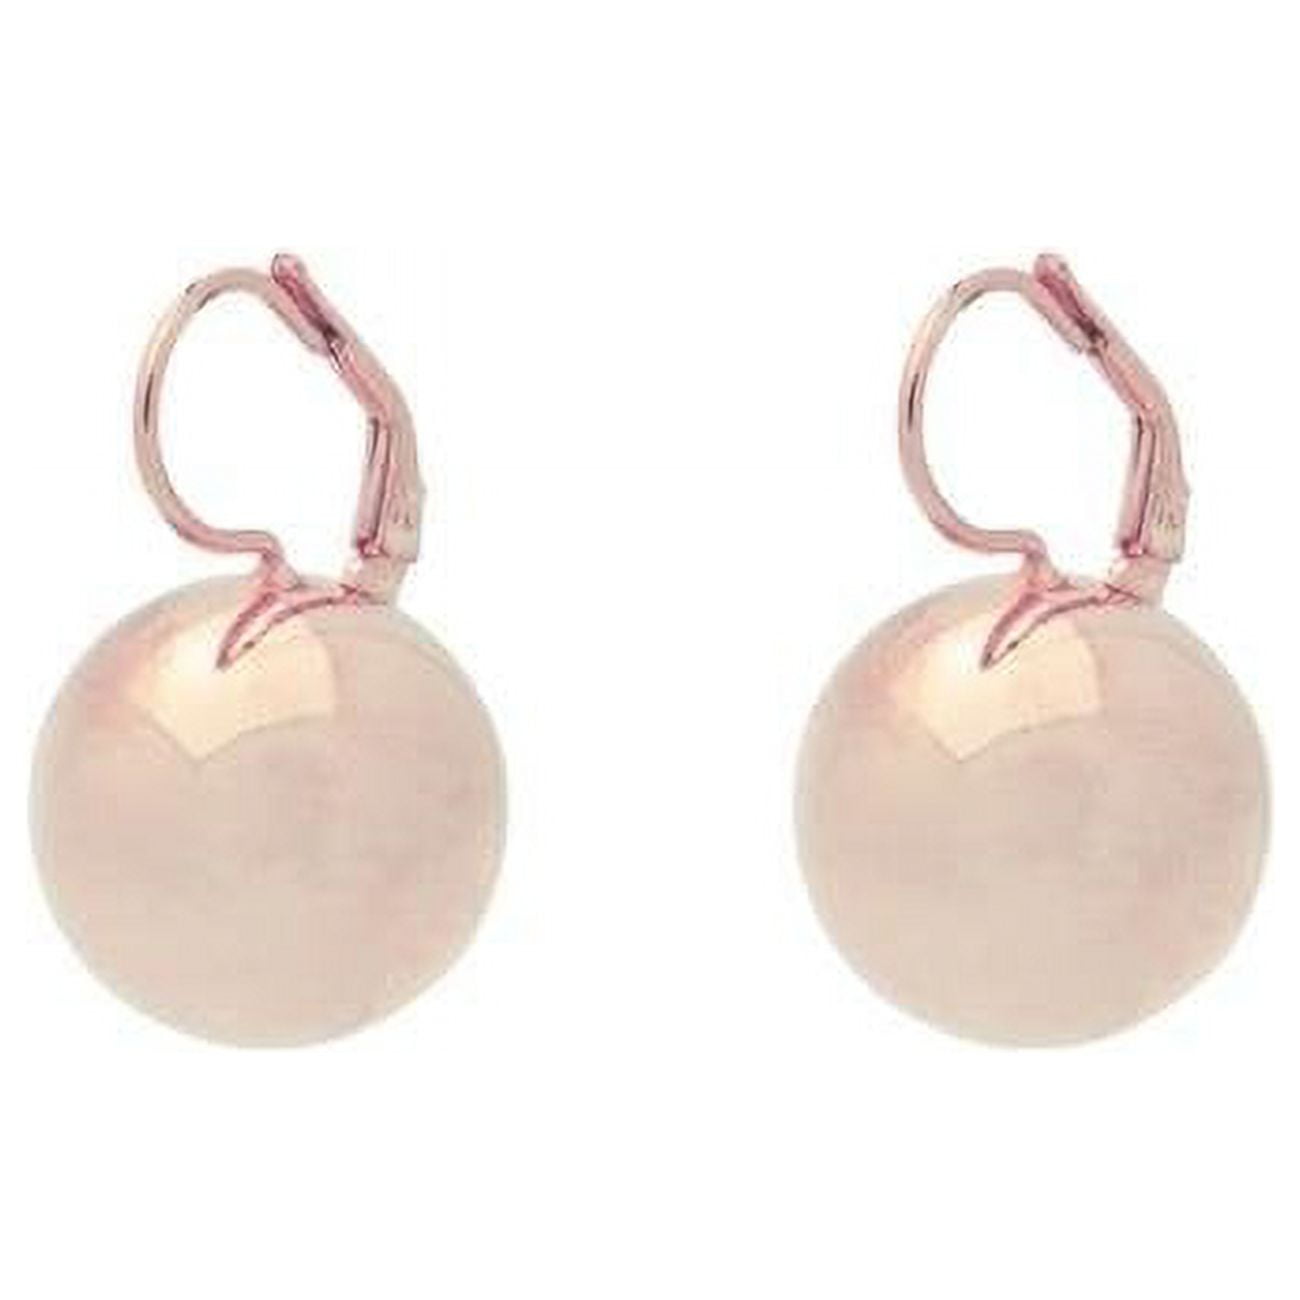 125129p 16 Mm Sterling Silver Rose Plated French Hook Ultra-light Ball Earrings